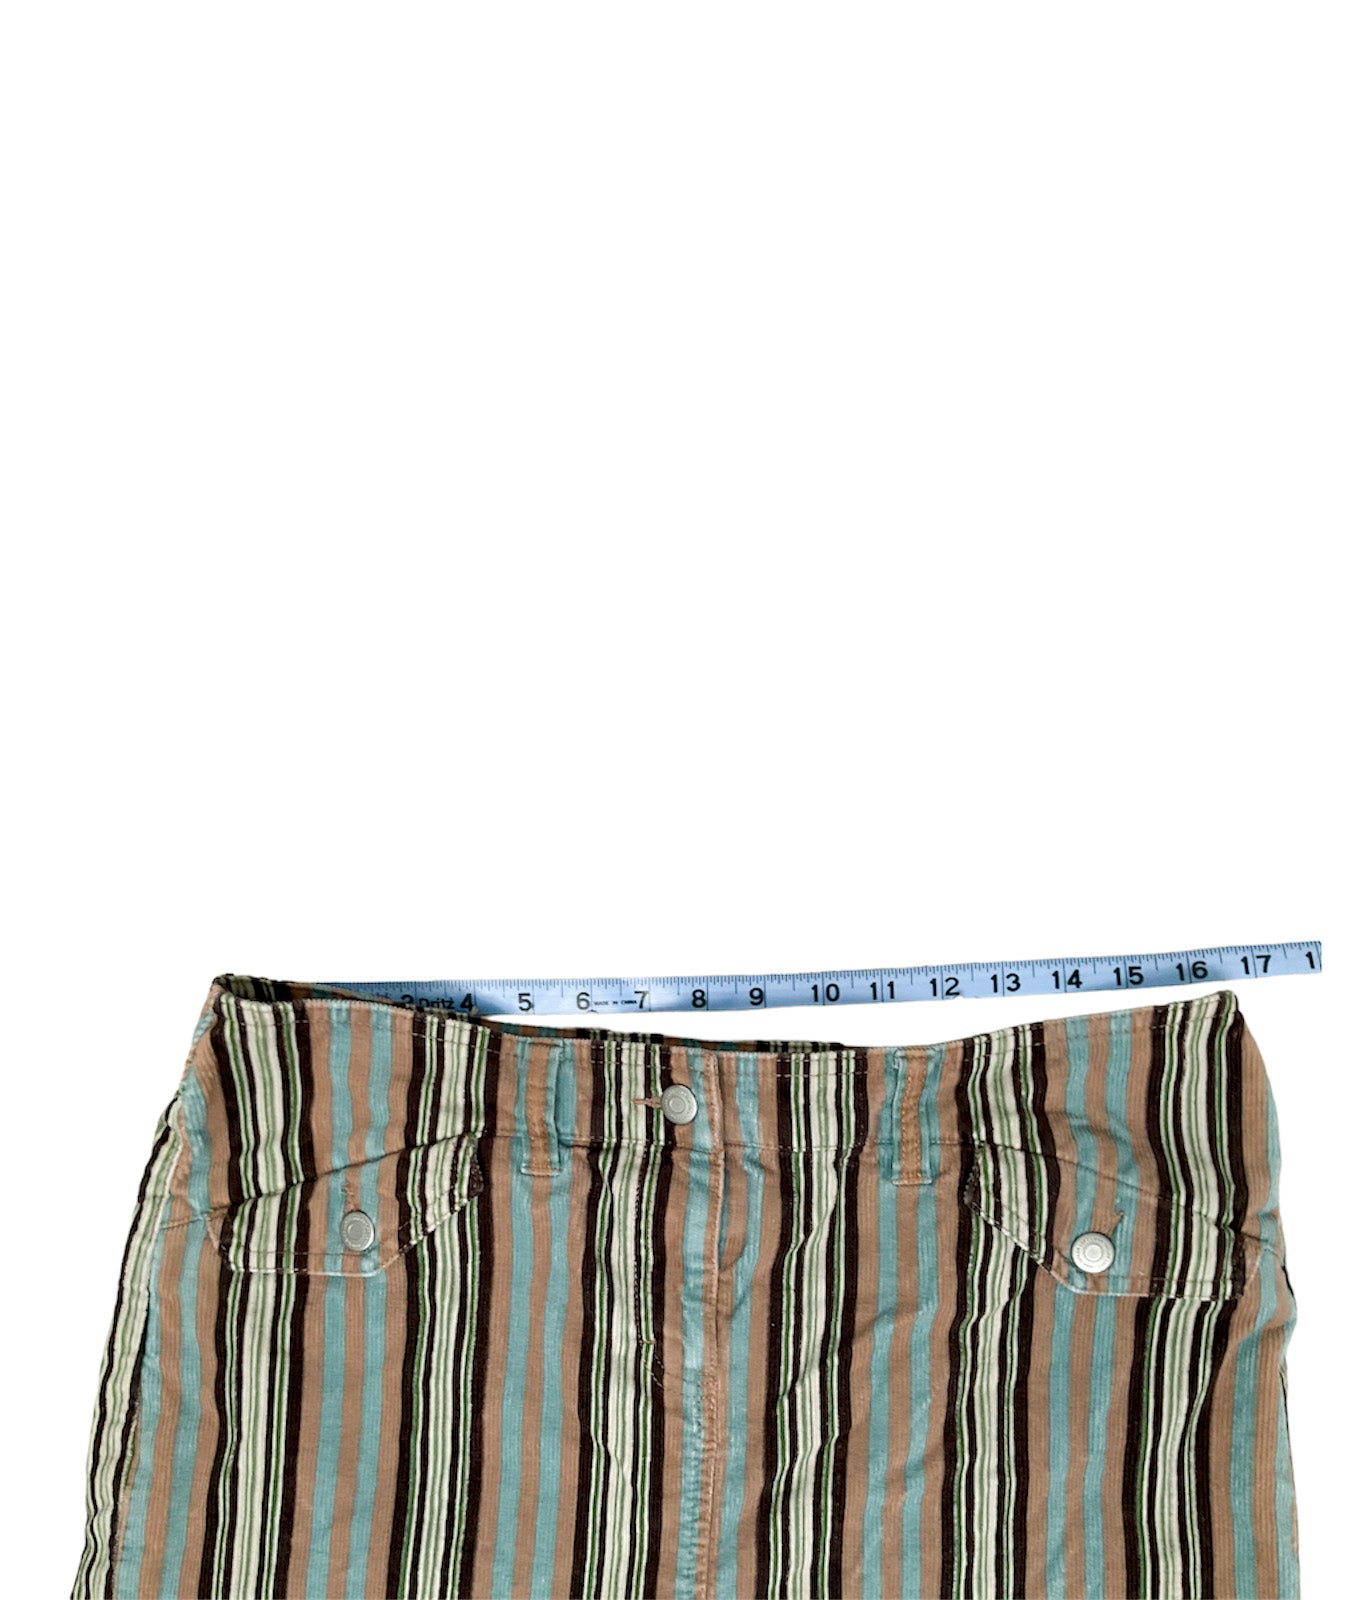 Retro 2000s Corduroy Striped Skirt